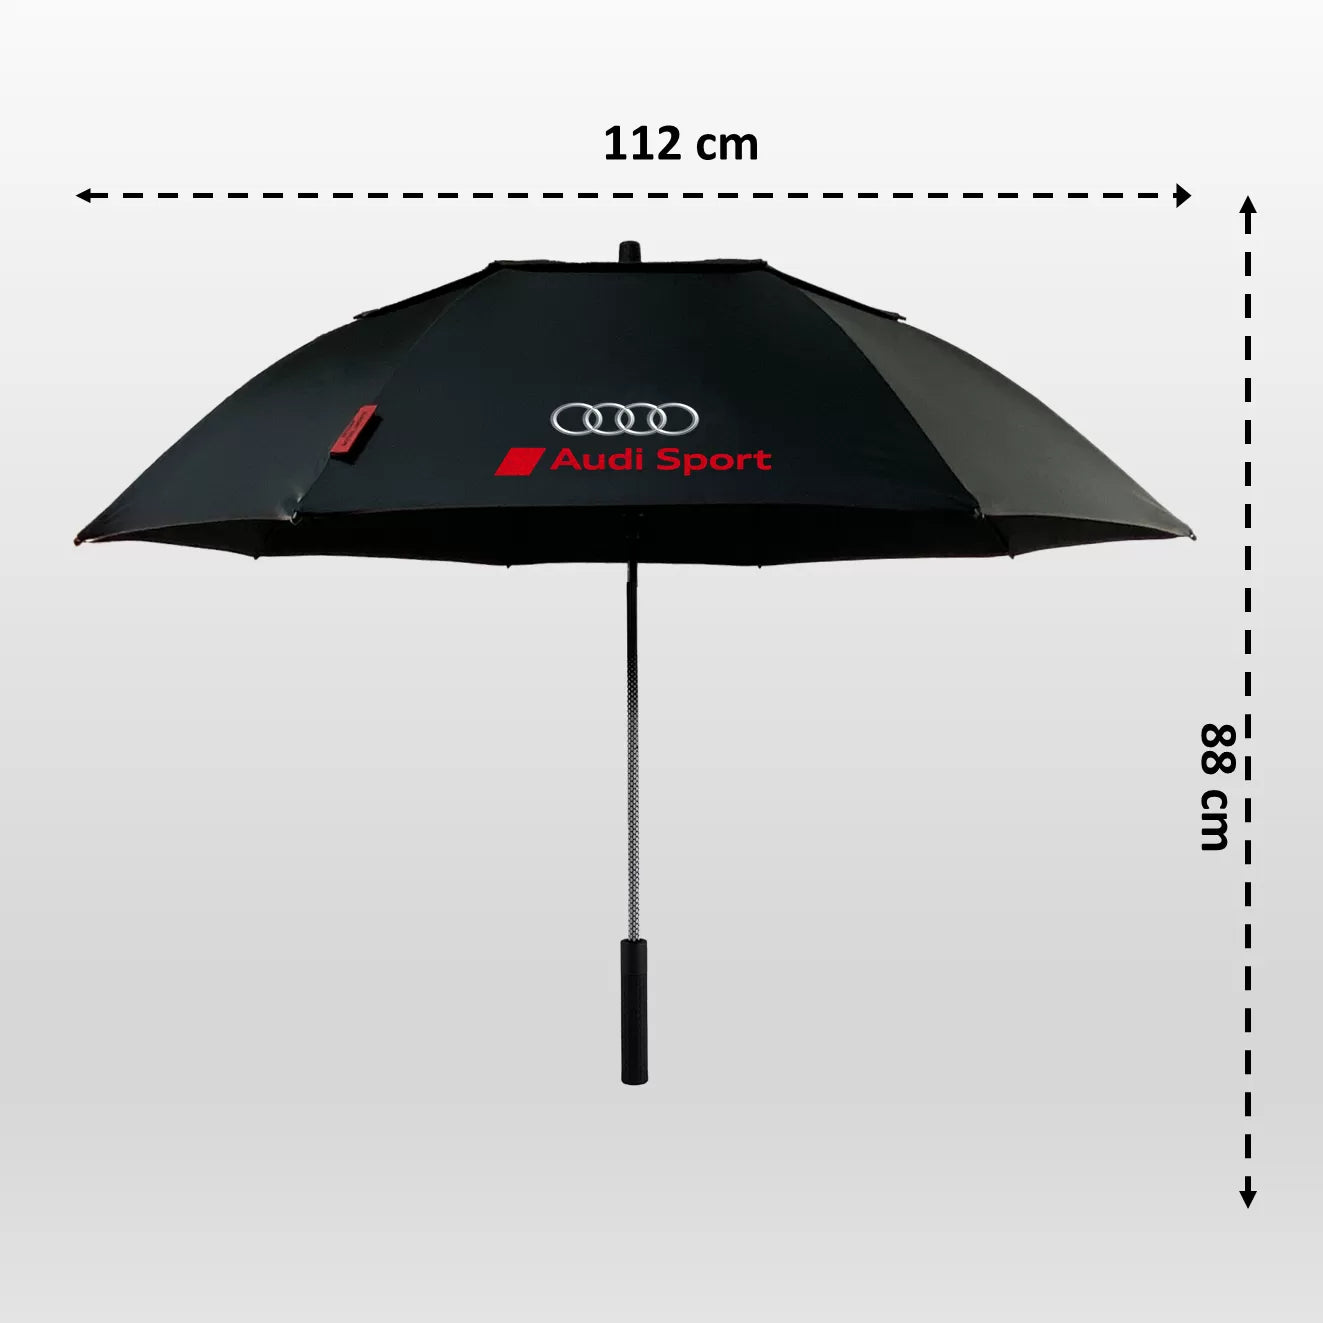 Audi Folding Umbrella -Audi Sport Umbrella